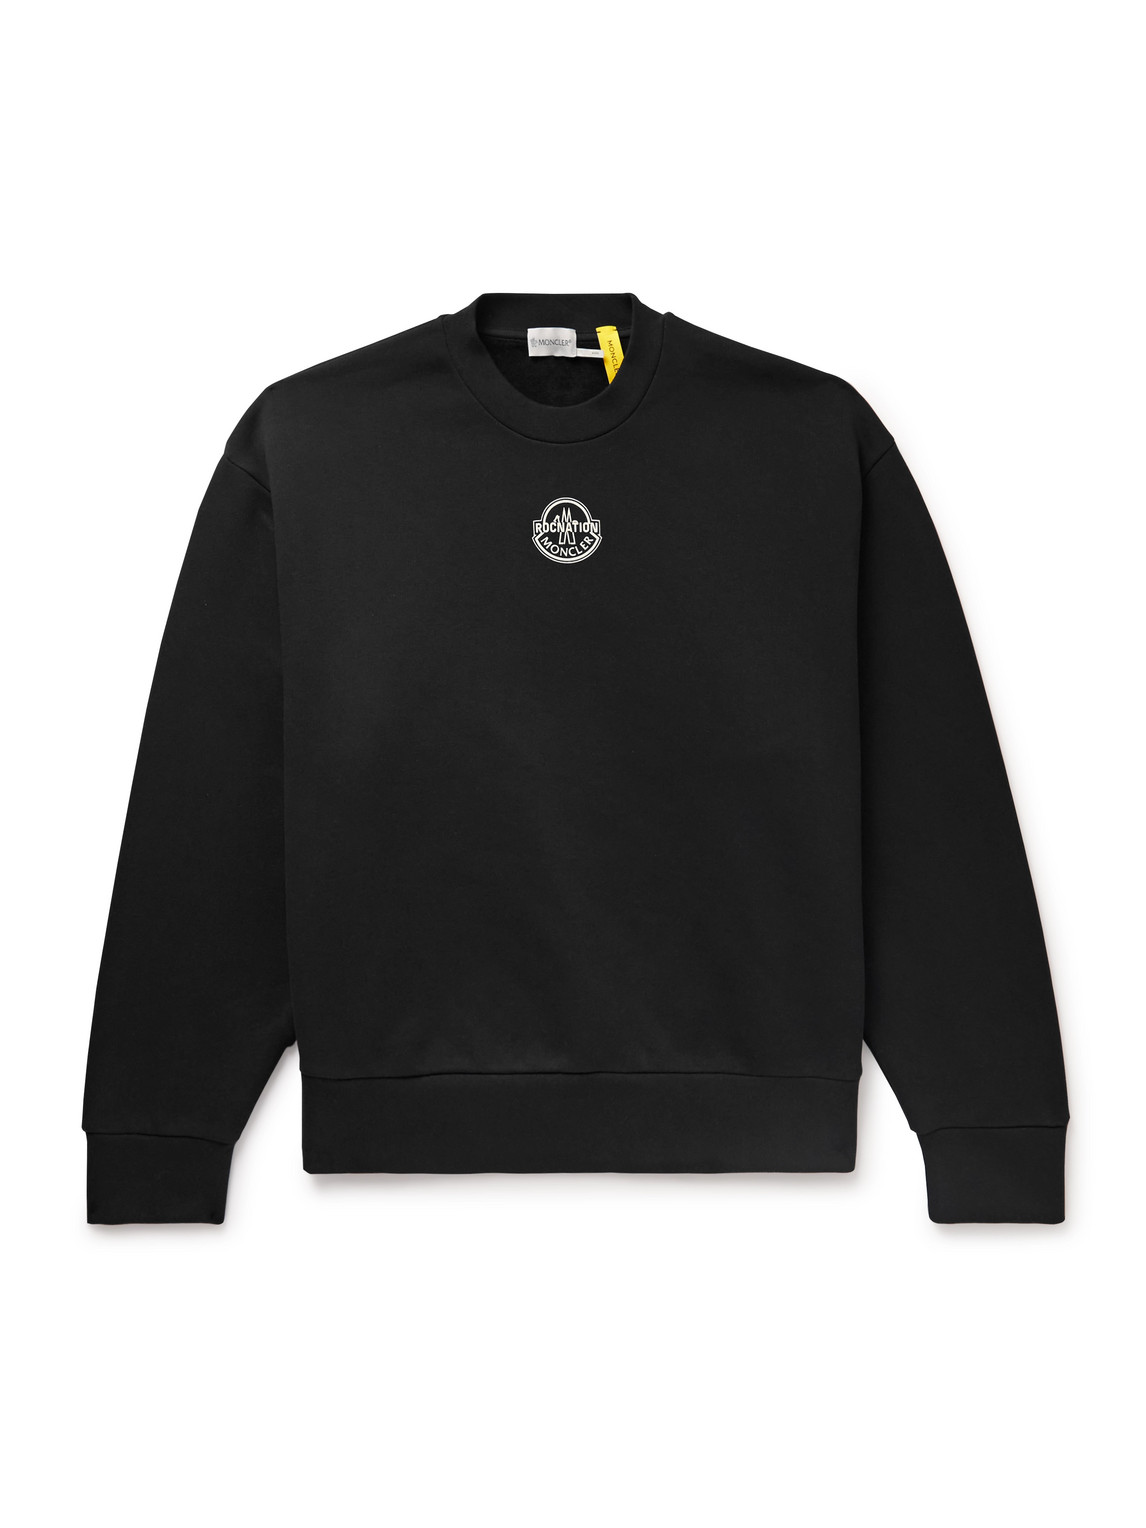 Shop Moncler Genius Roc Nation By Jay-z Logo-print Cotton-jersey Sweatshirt In Black